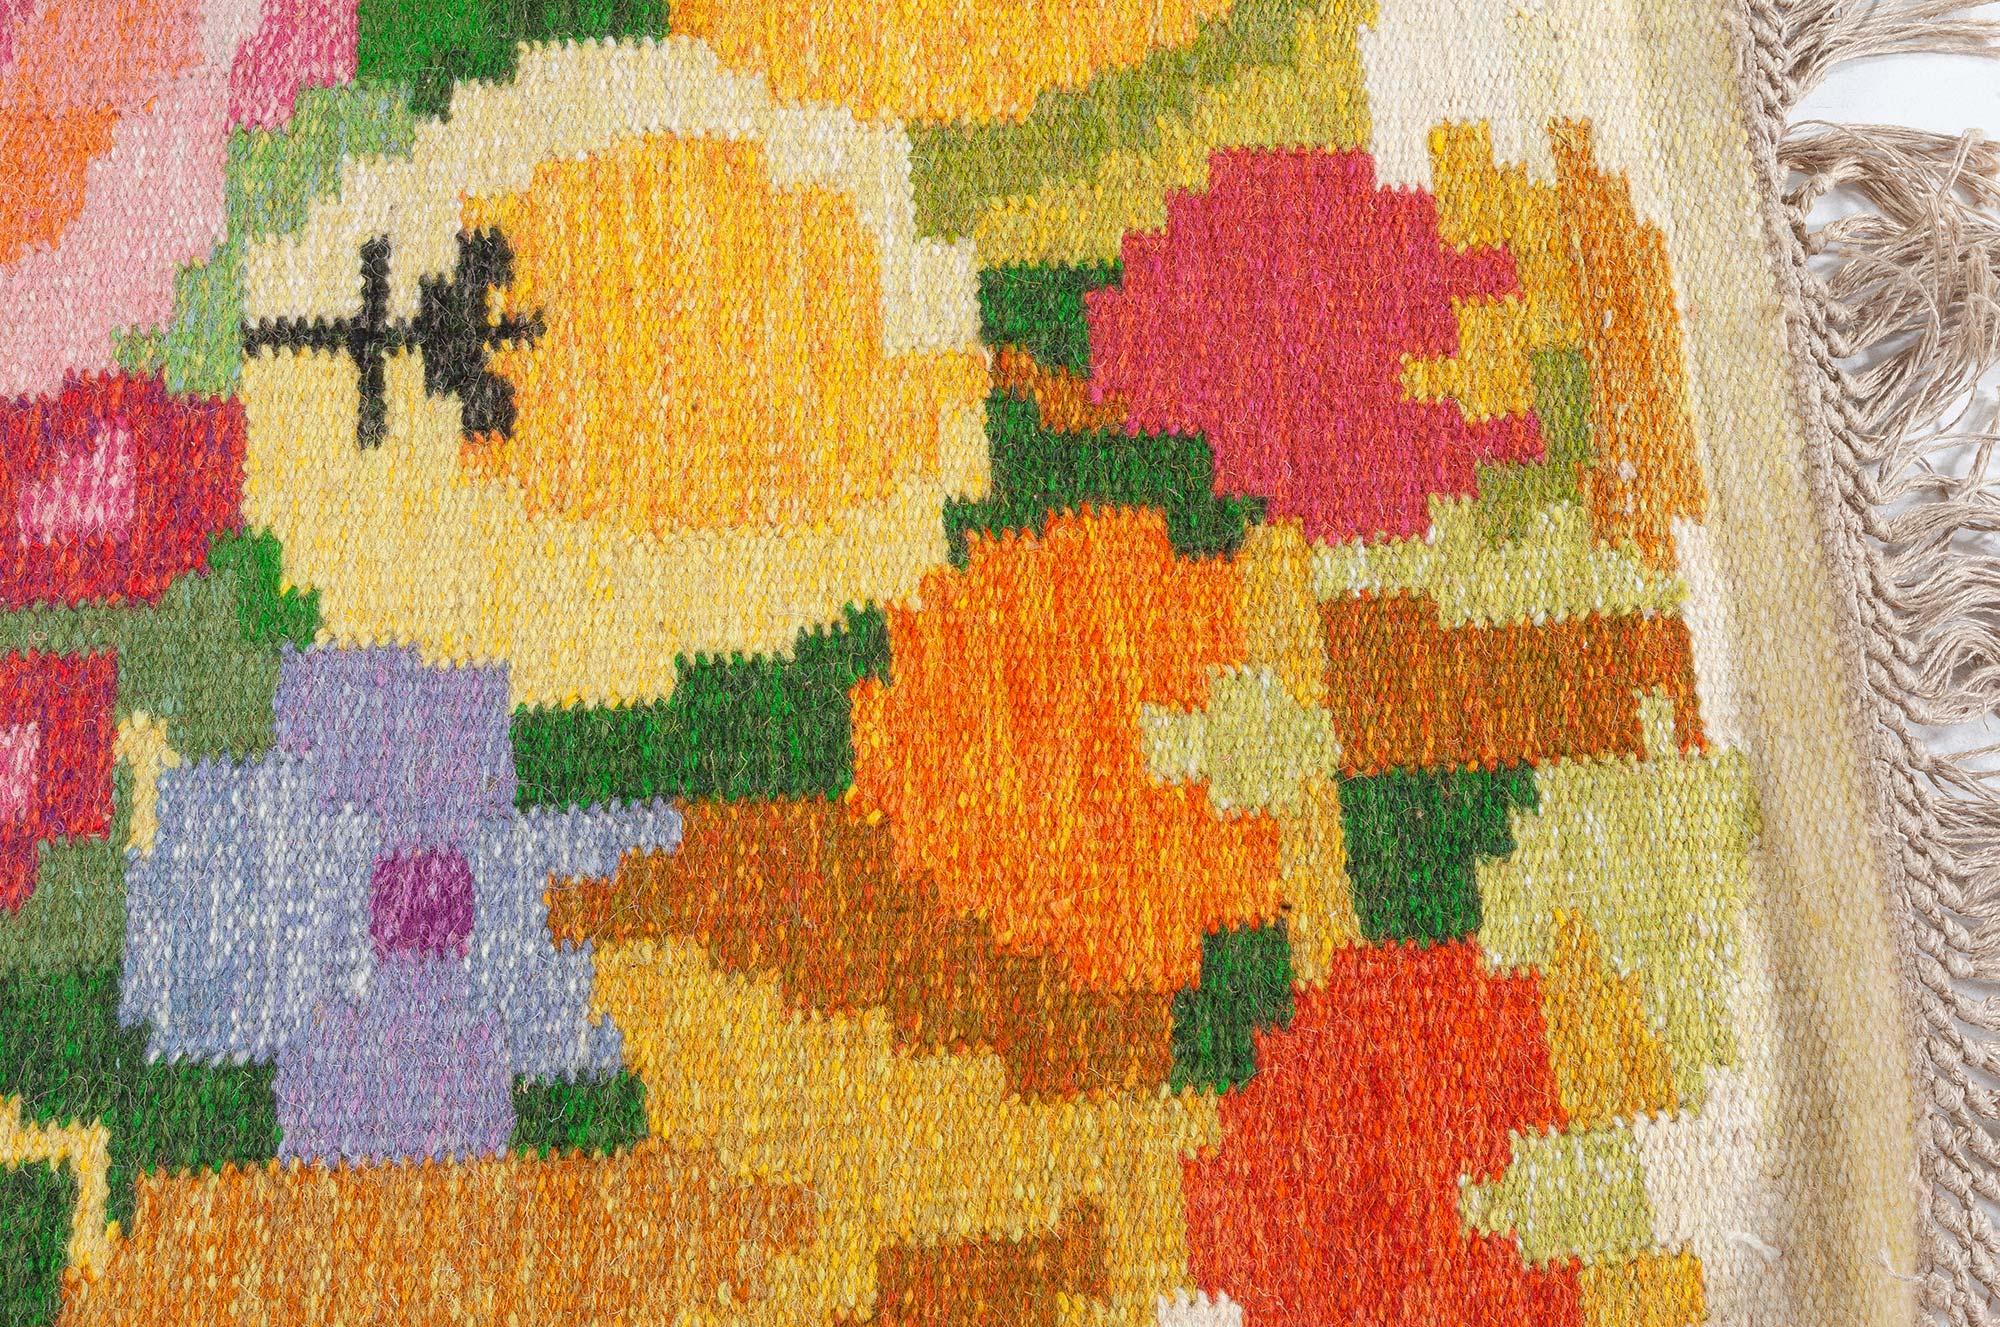 Vintage Swedish floral design flat woven rug by Ingegerd Silow
Size: 2'9